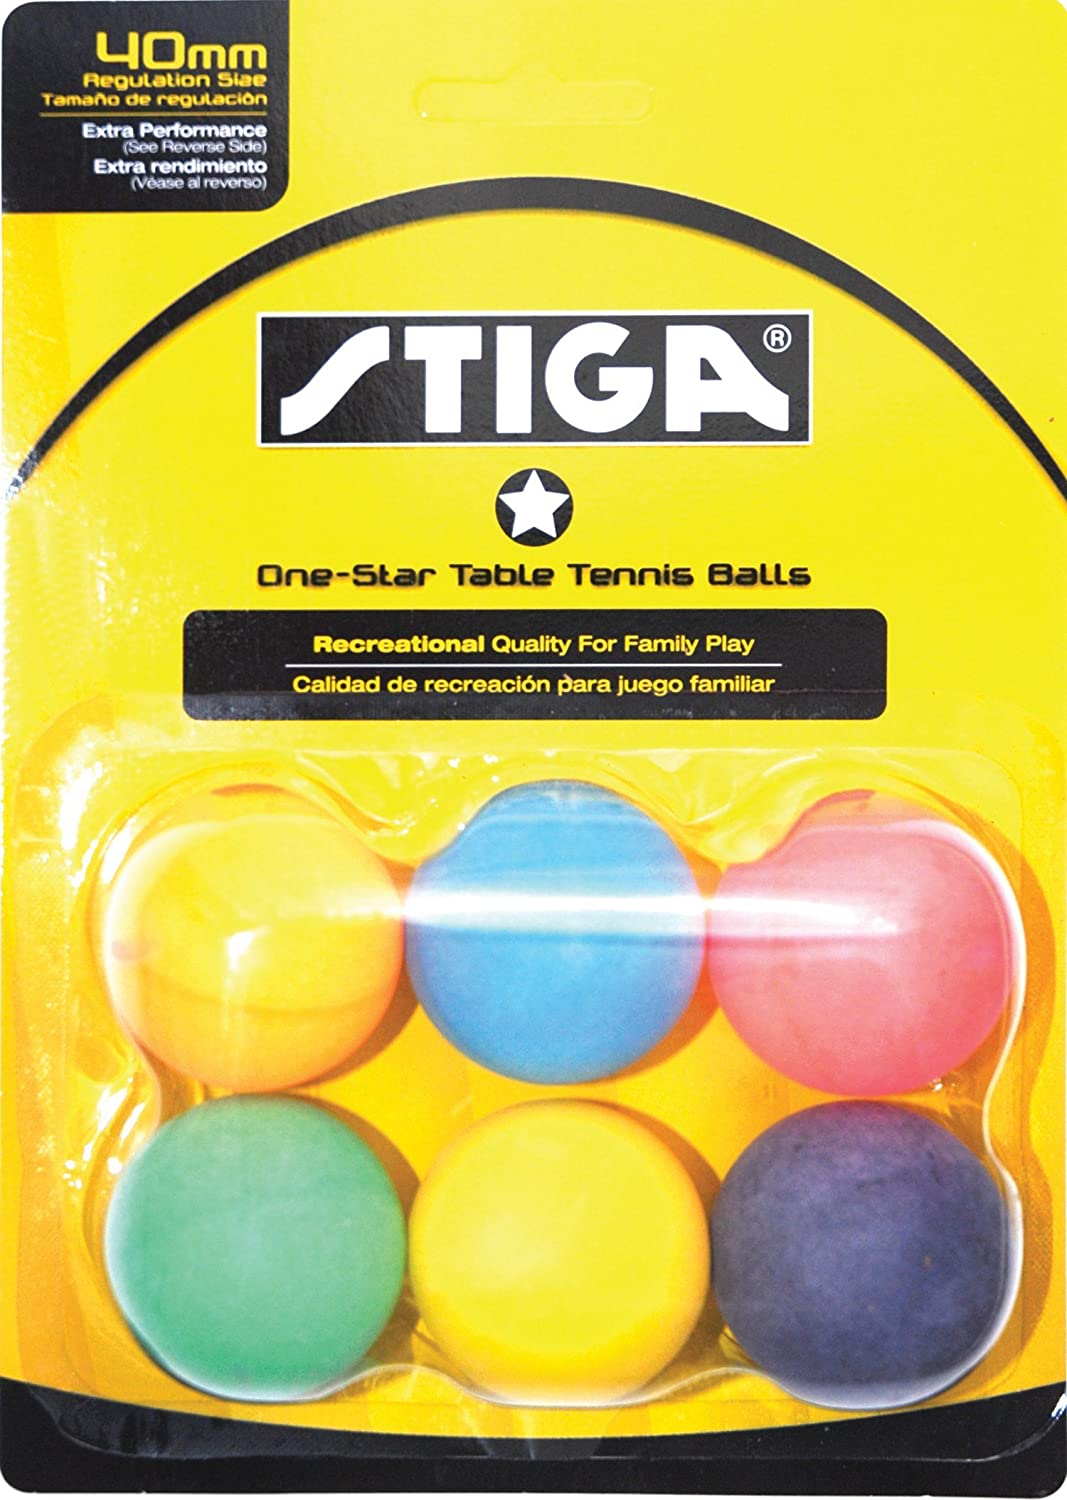 STIGA 1-Star Assorted Recreational